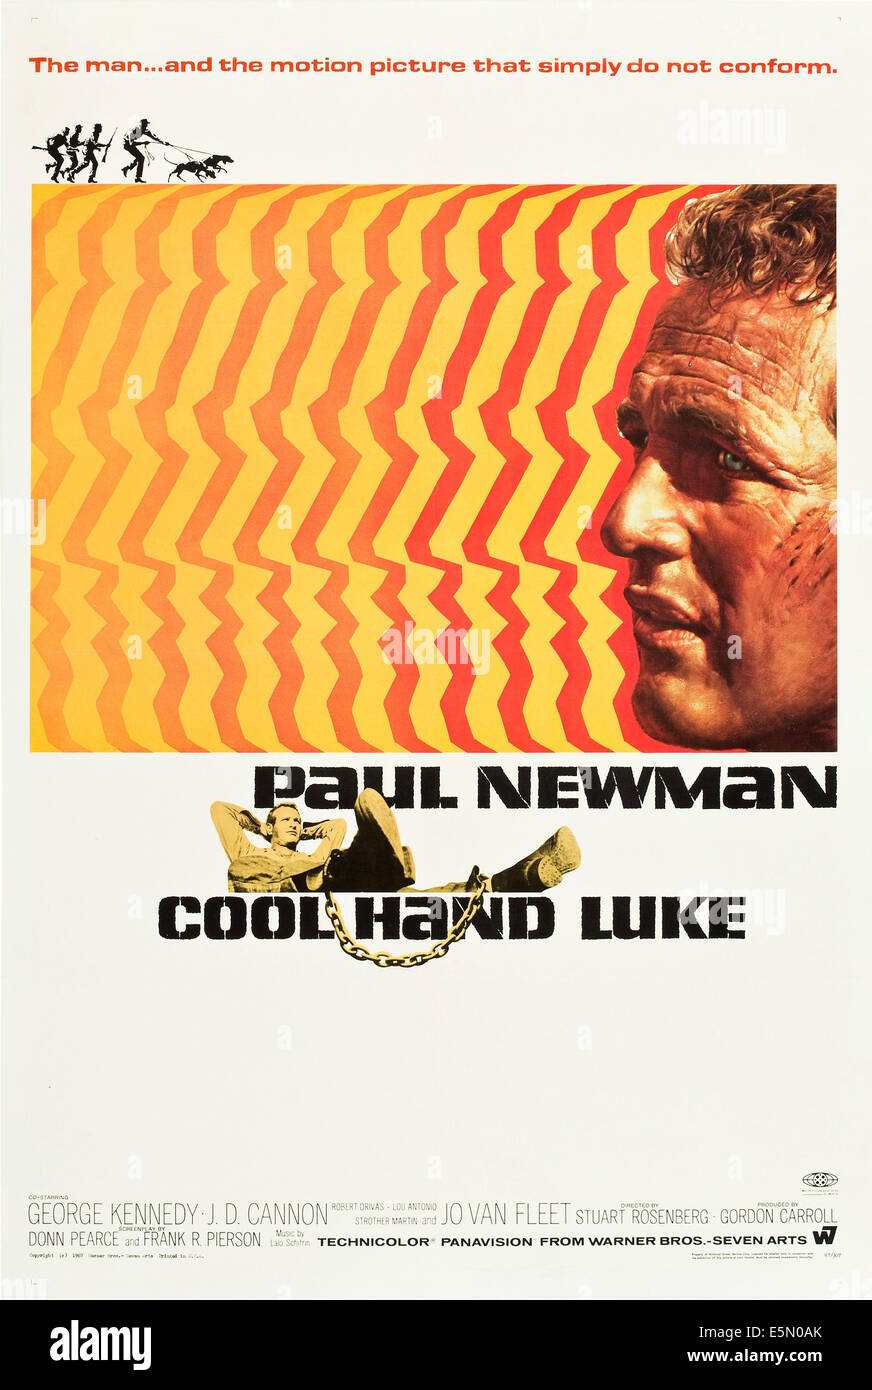 COOL HAND LUKE, Paul Newman, 1967. Stock Photo